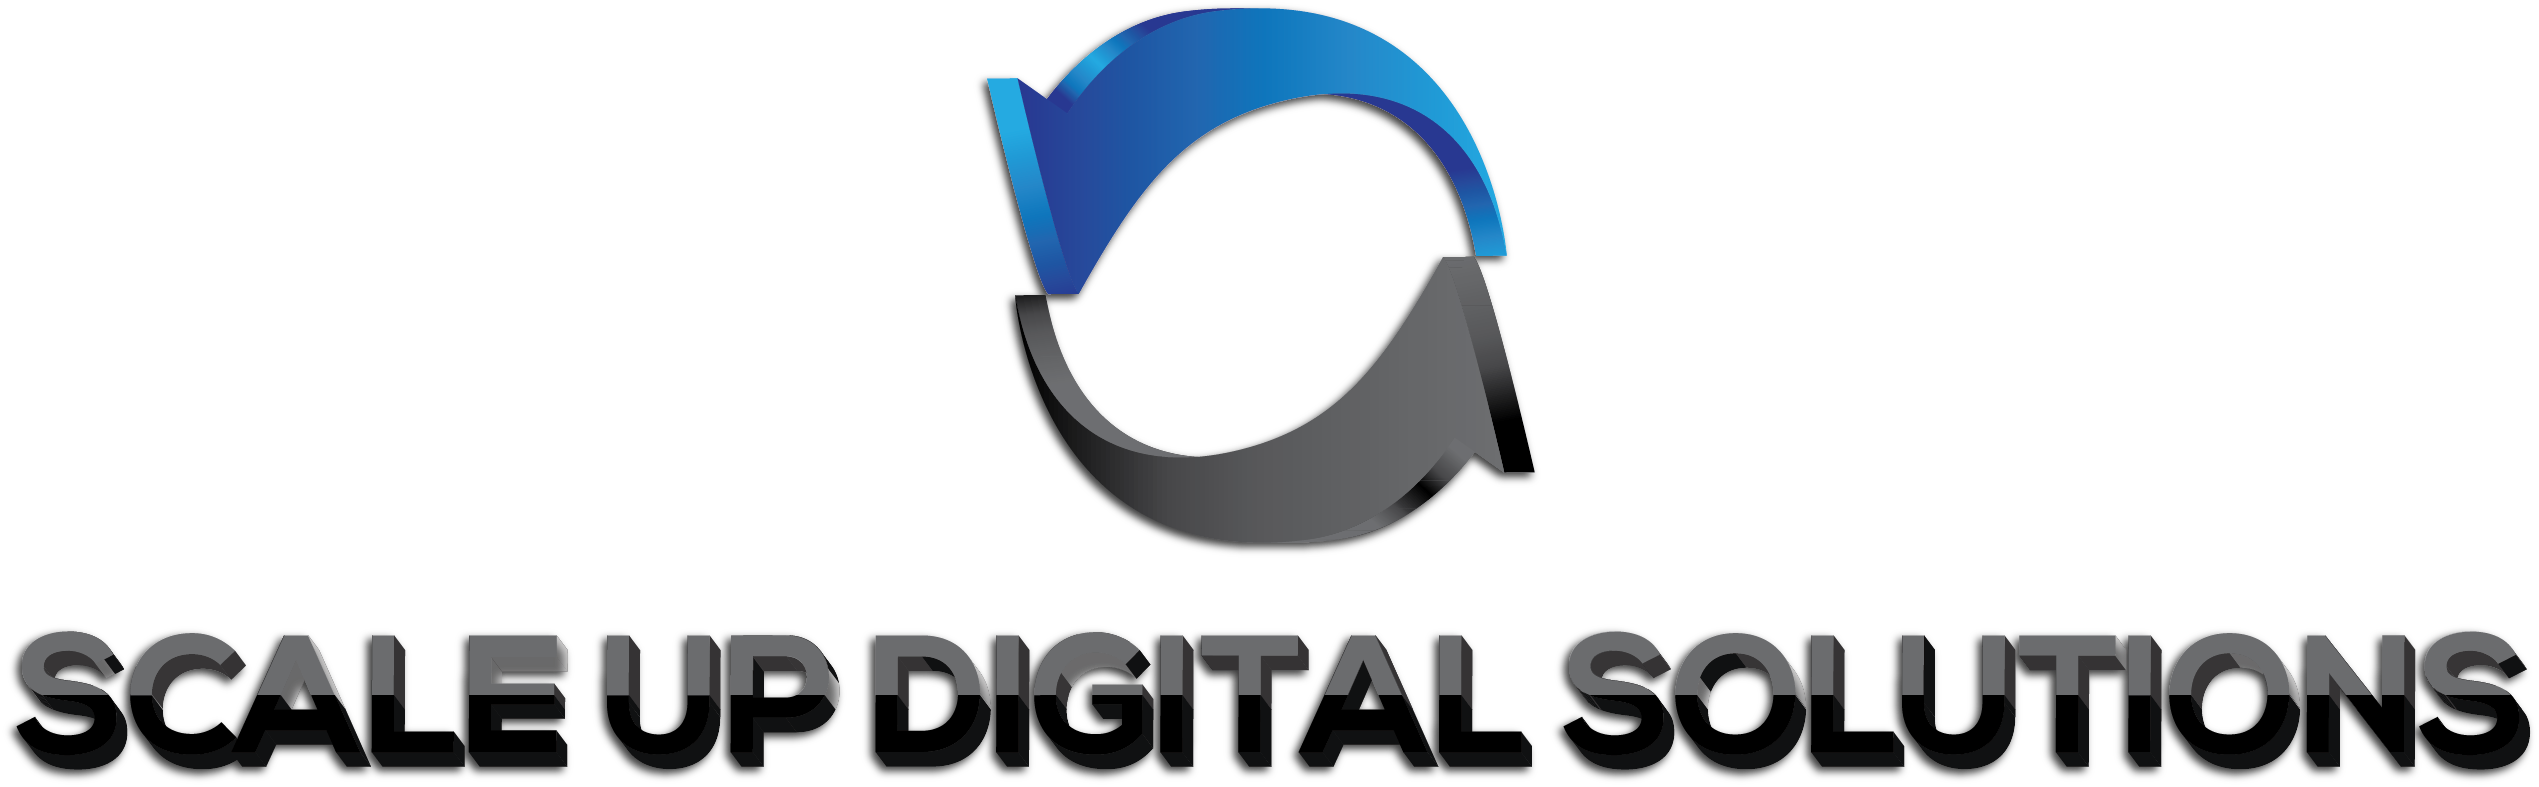 ScaleUp Digital Solutions